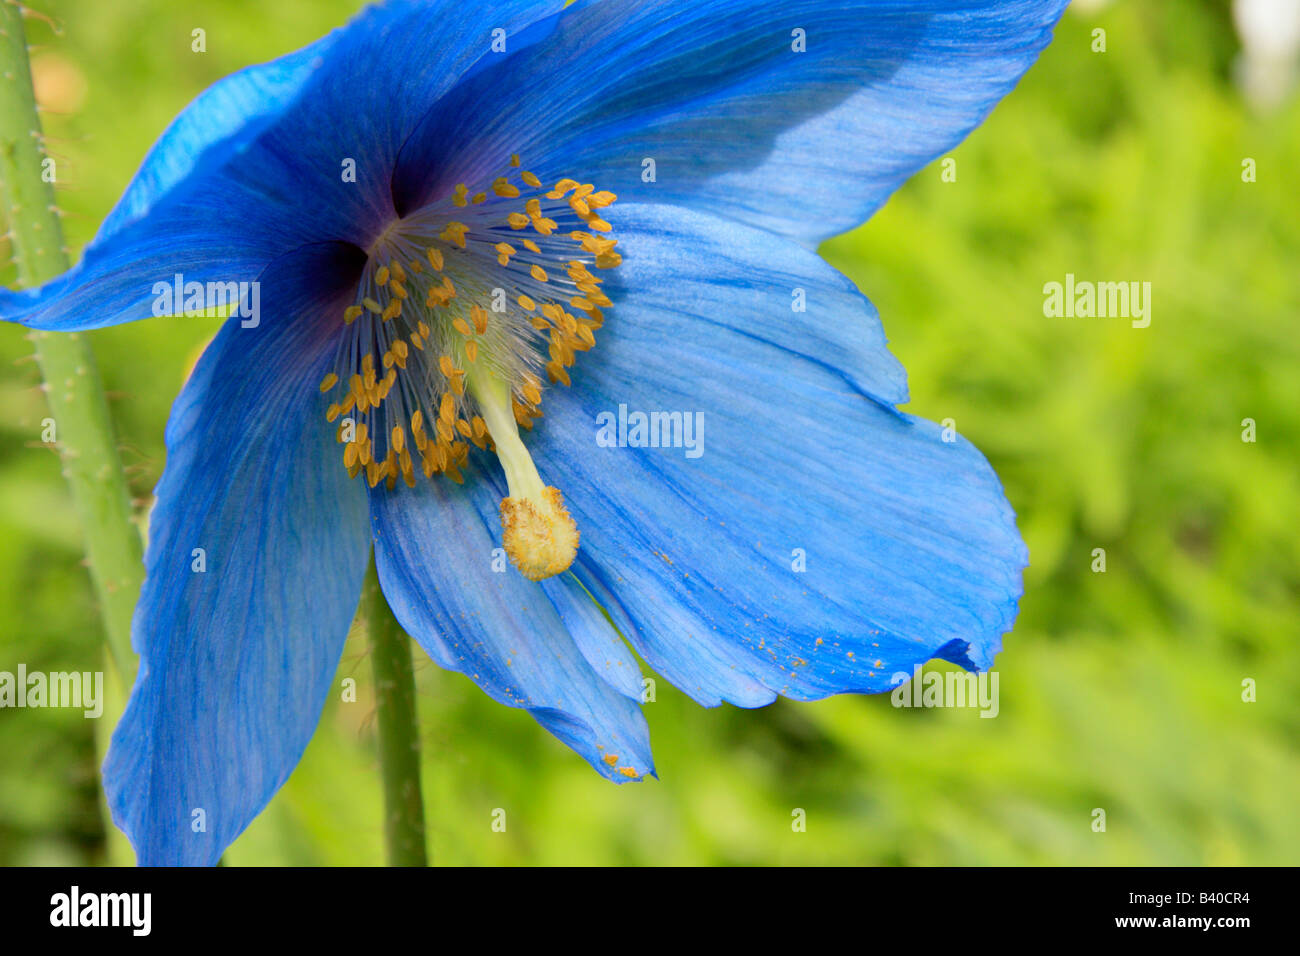 Flower of Blue Himalayan poppy Meconopsis x sheldonii Stock Photo